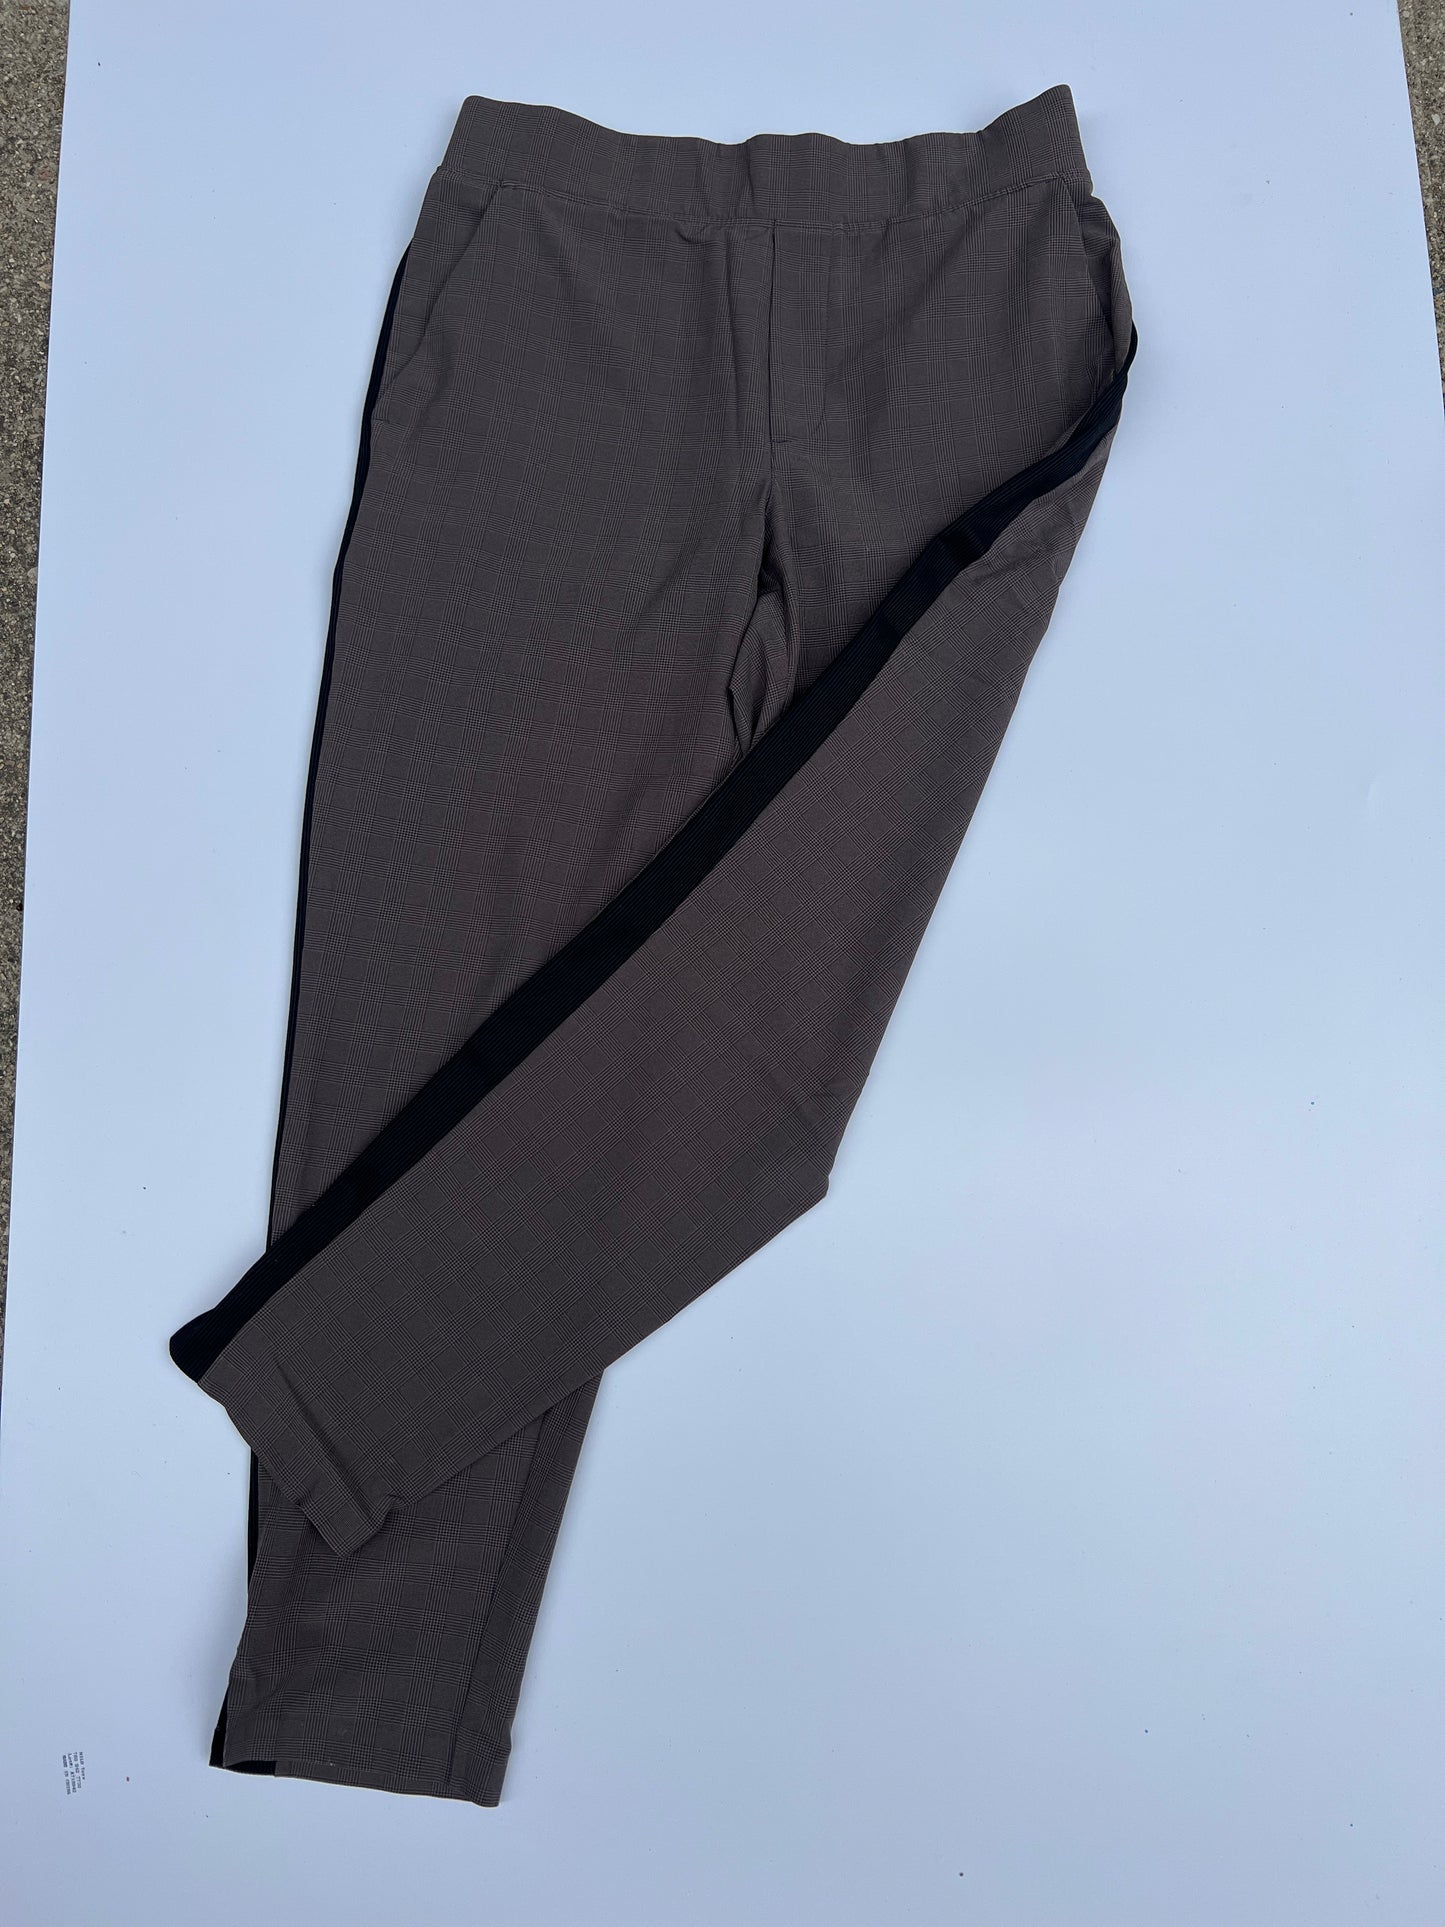 Athleta Womens Brooklyn pant size 6. Plaid pattern with black stripe